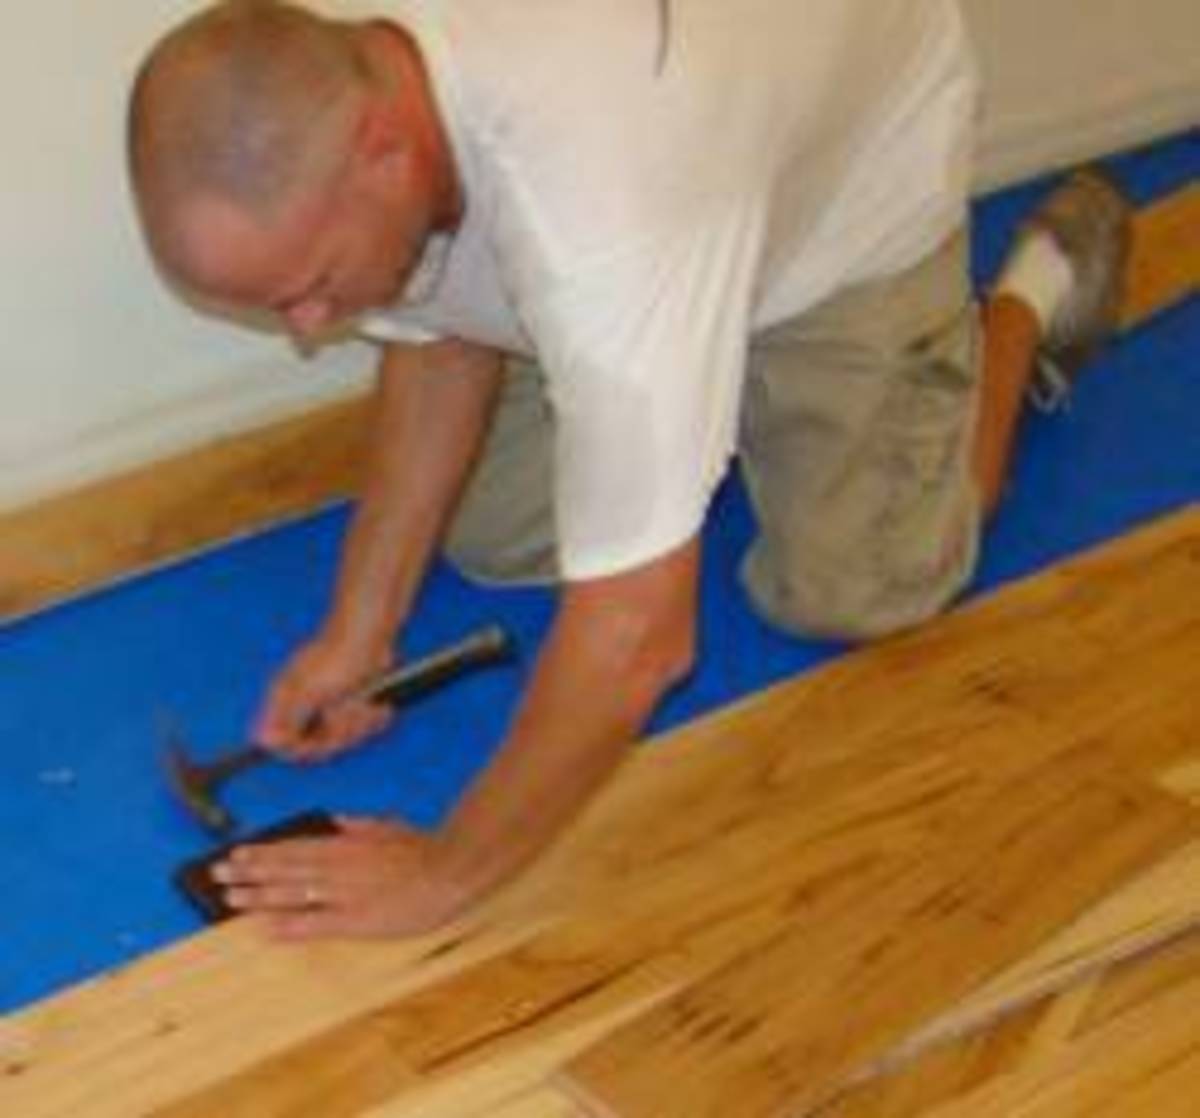 install hardwood floor